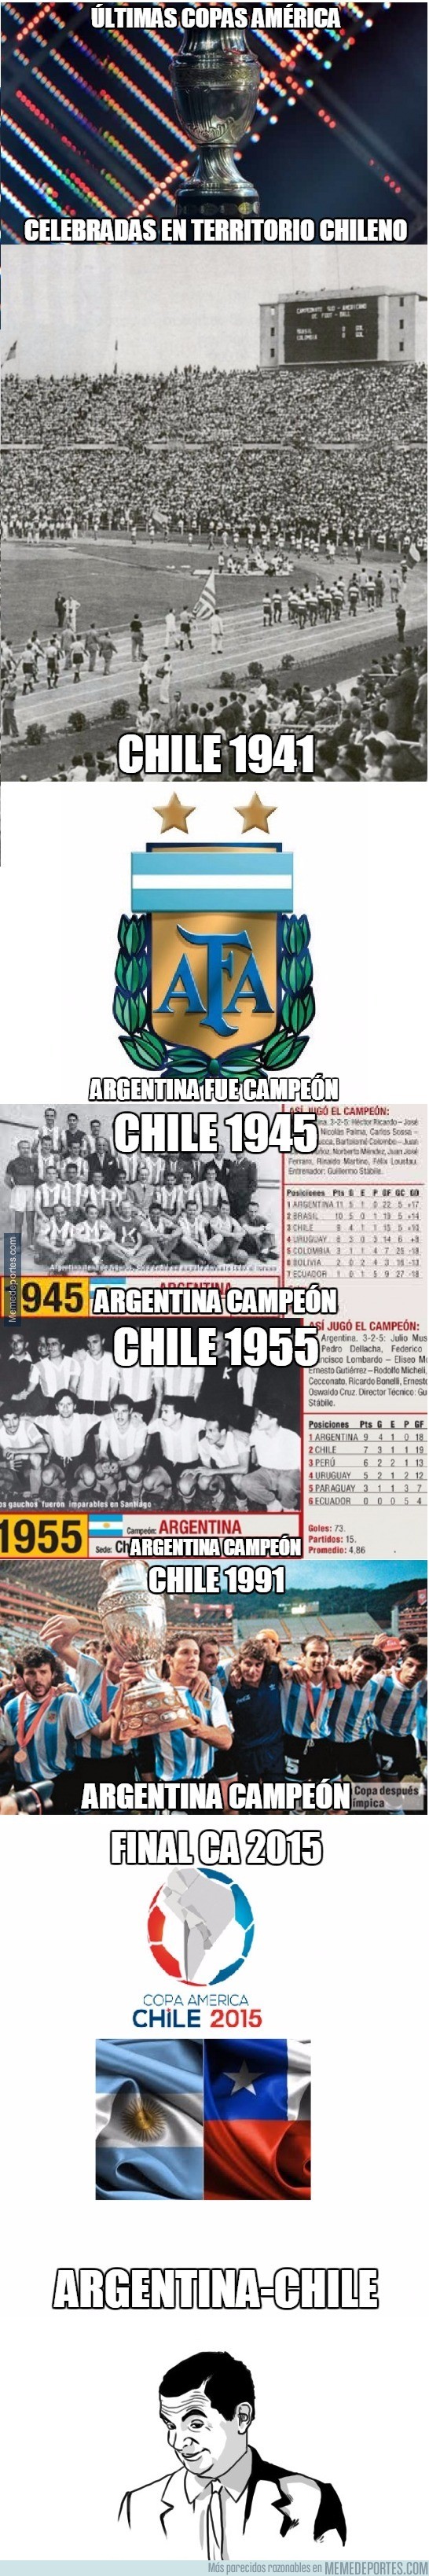 609159 - La historia de una Argentina campeona